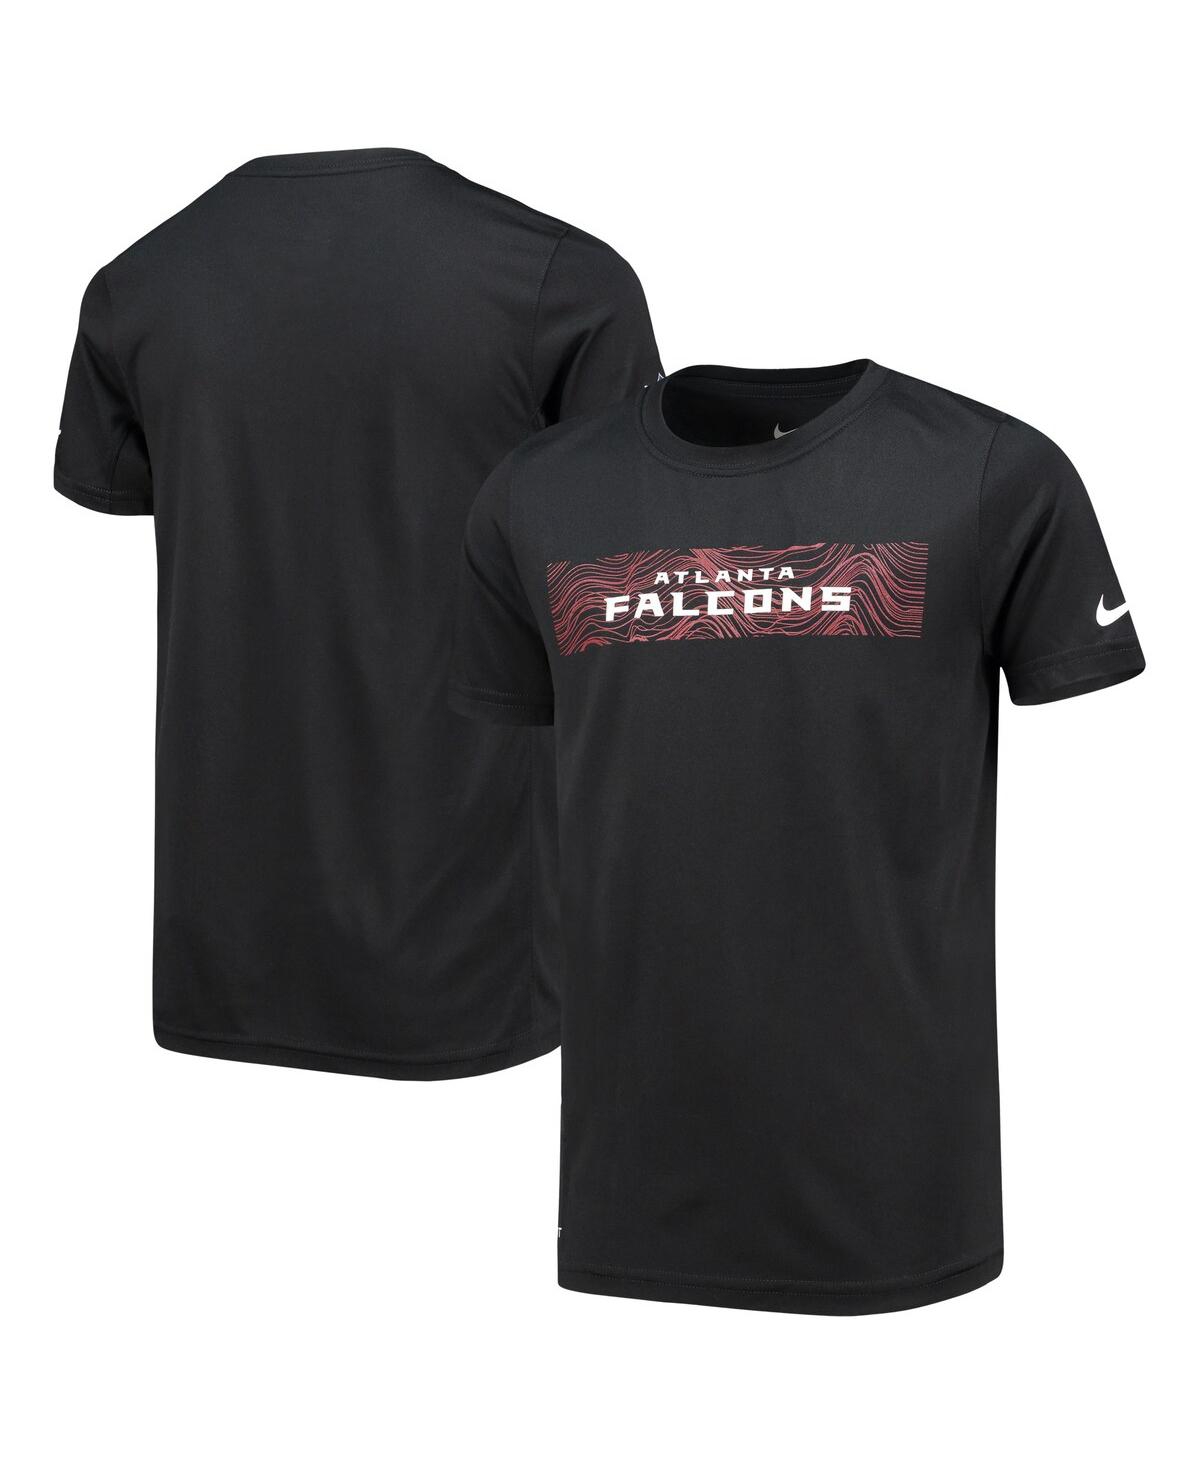 UPC 192414001121 product image for Youth Boys Nike Black Atlanta Falcons On-Field Seismic Performance T-shirt | upcitemdb.com